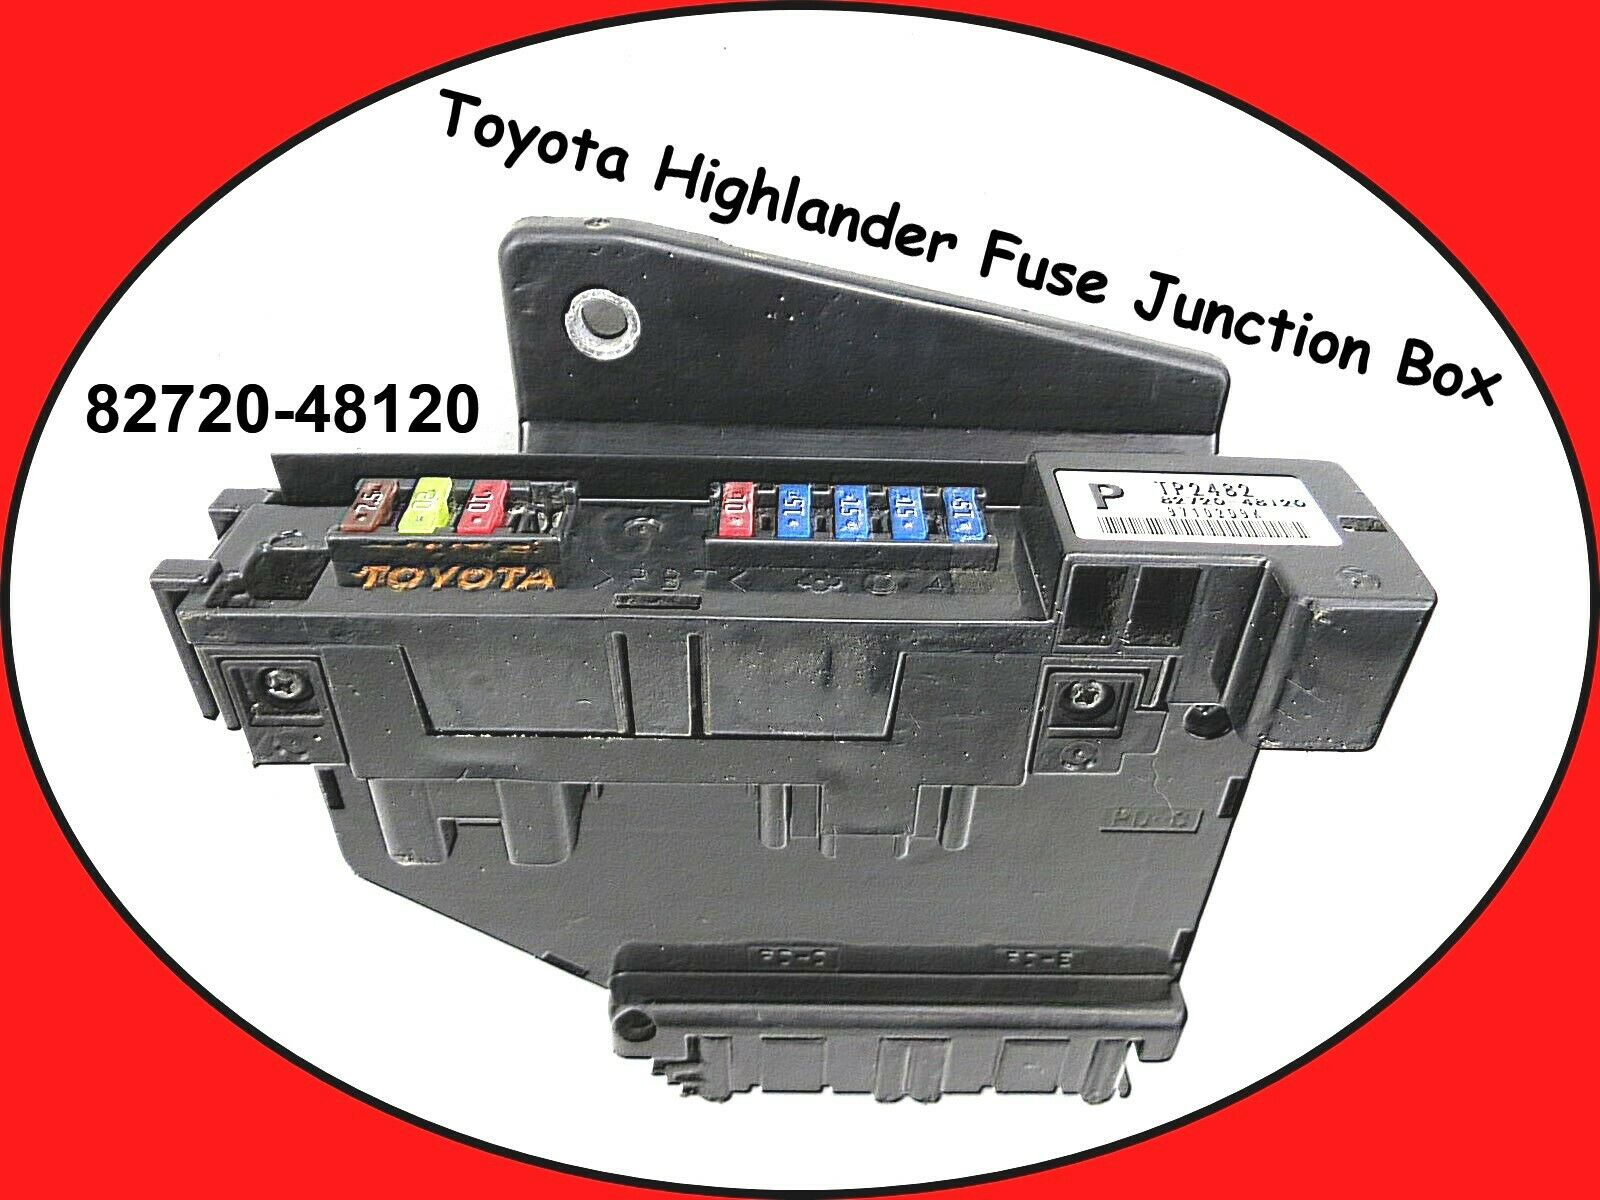 Toyota Highlander Fuse Junction Box, 2011-2013, 82720 ...